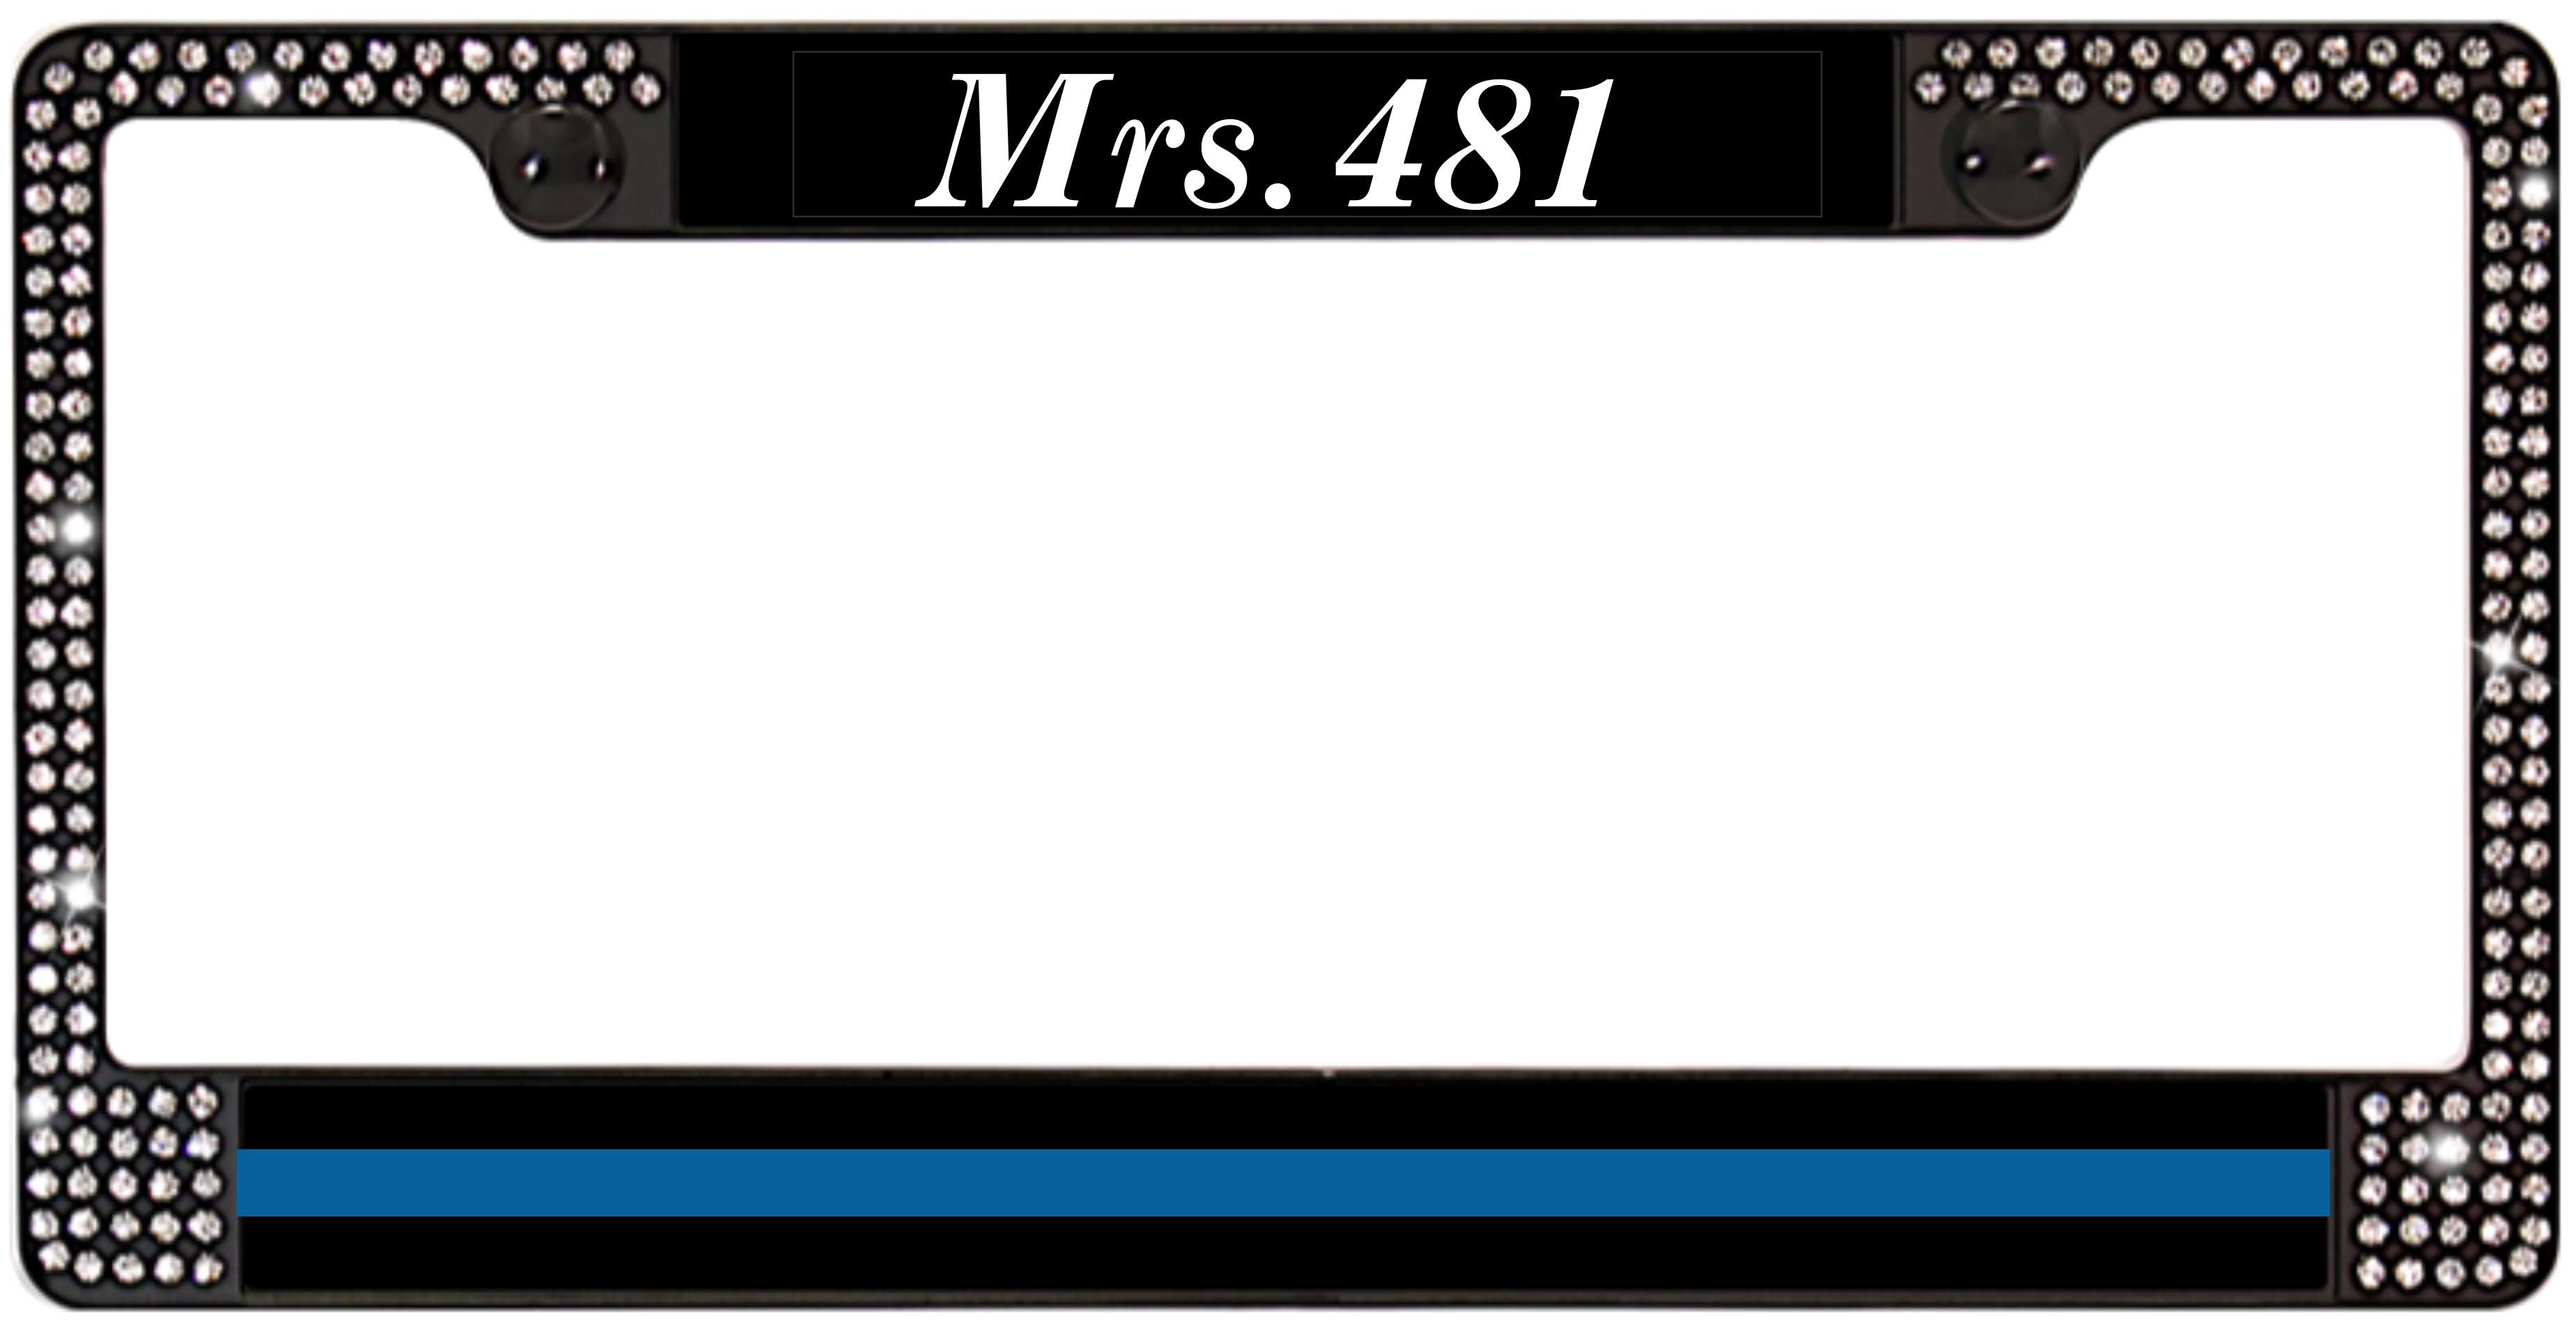 Mrs. 481